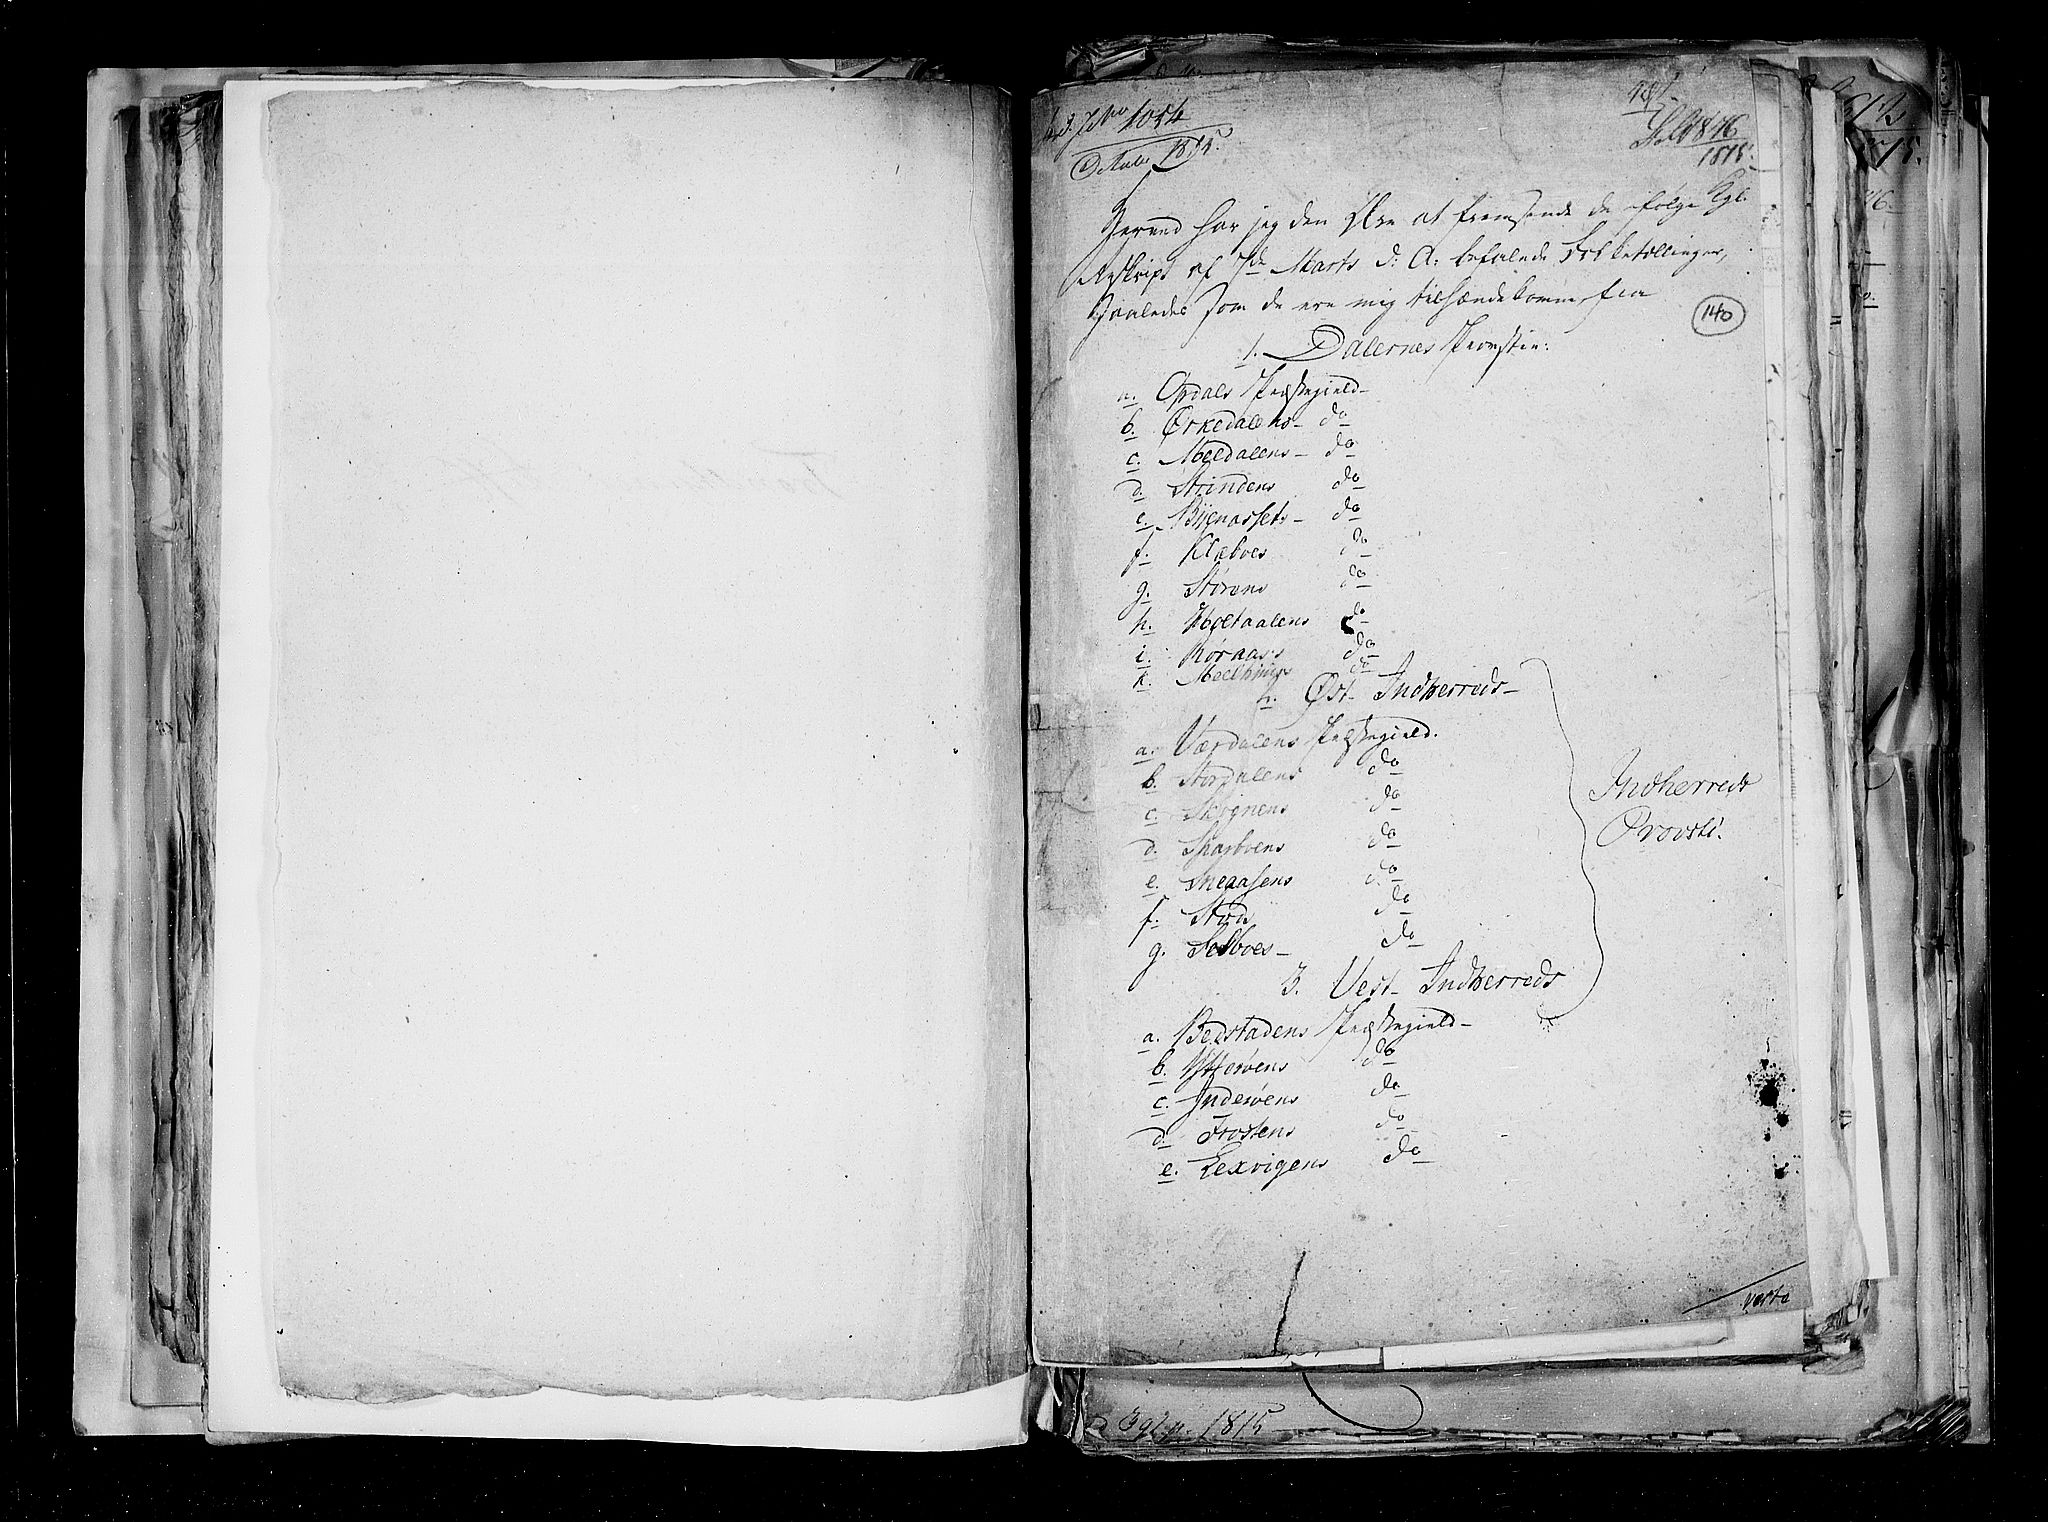 RA, Census 1815, vol. 2: Bergen stift and Trondheim stift, 1815, p. 86